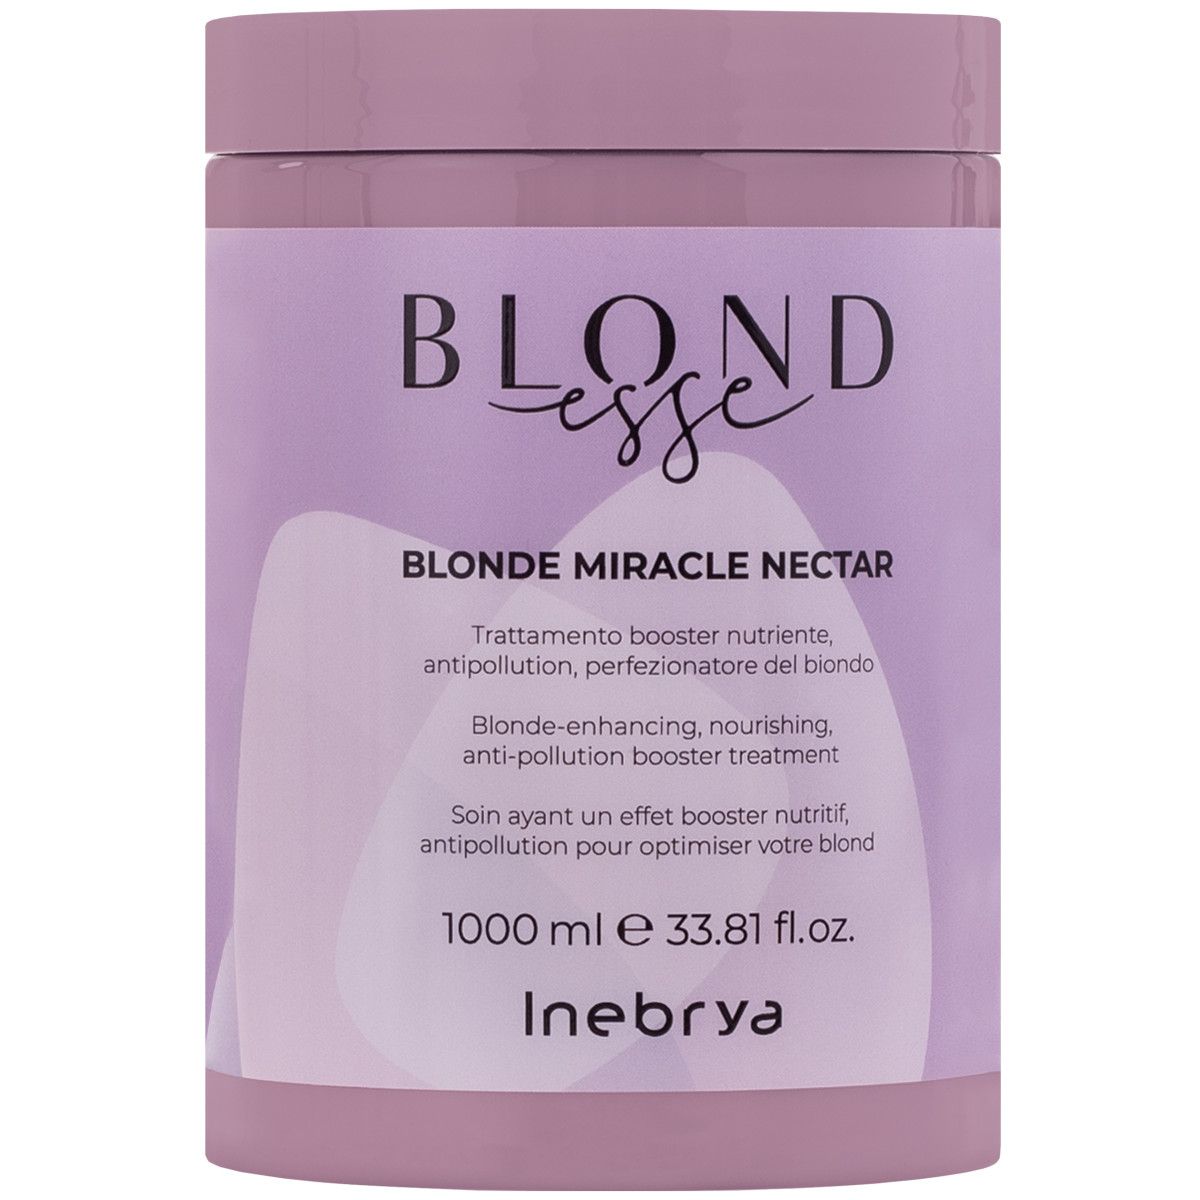 Inebrya Blondesse Blond Miracle - nektar maska micelarna do włosów, 1000ml